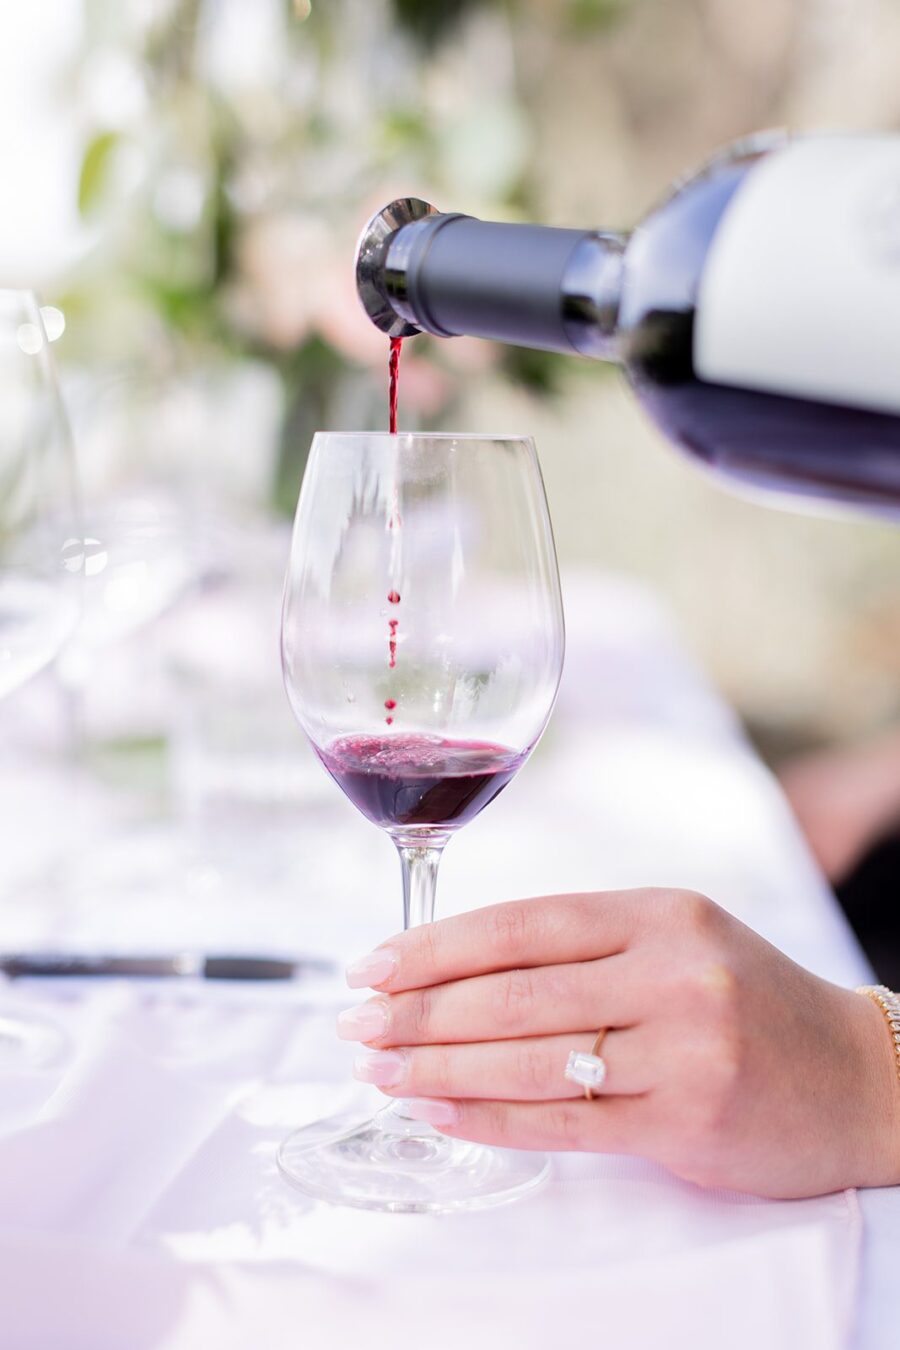 Napa California Winery proposal vineyard proposal wine glass tower custom wine glasses flower garland pouring wine